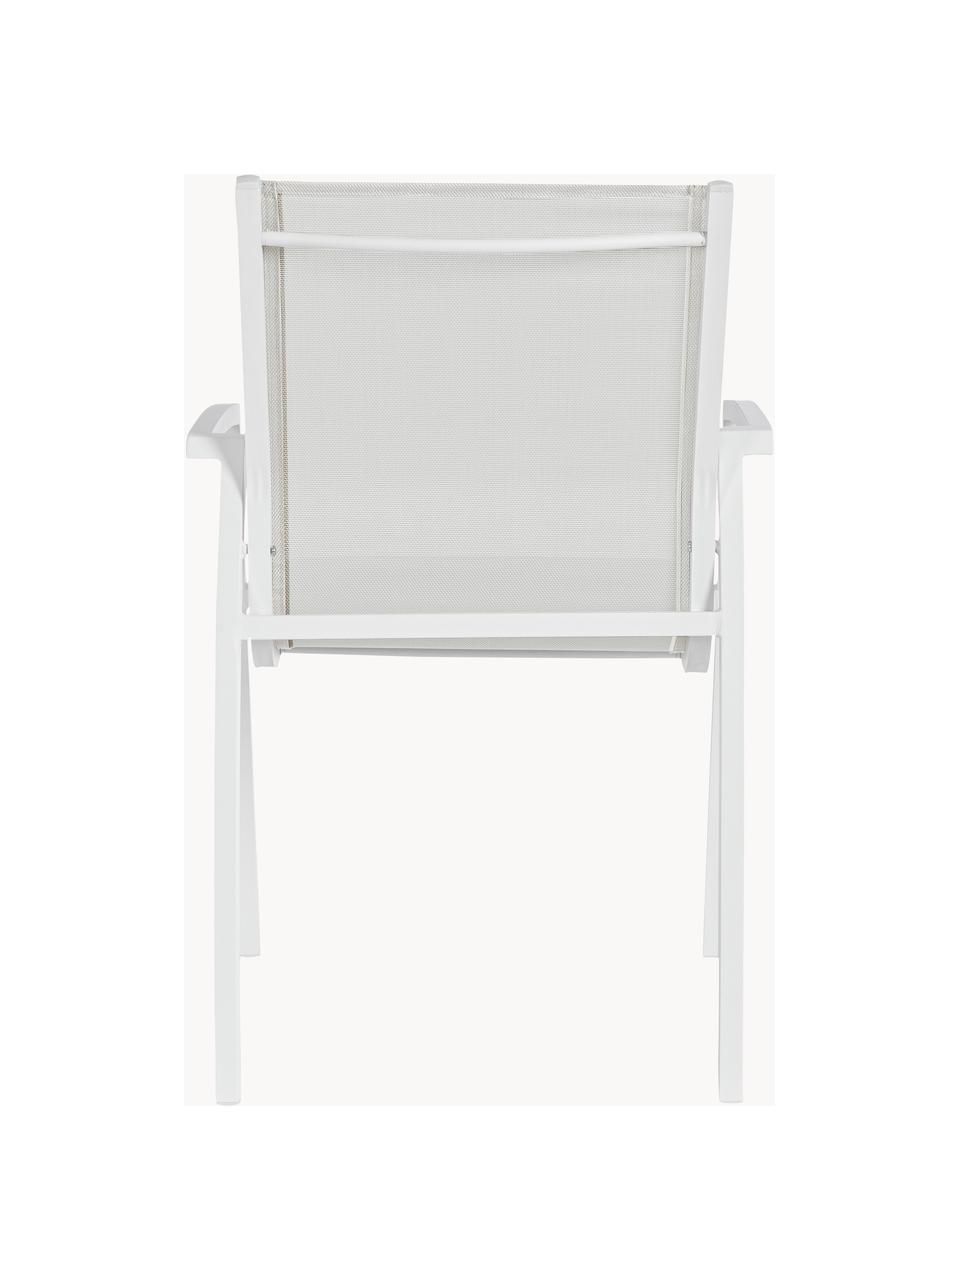 Chaise de jardin Hilla, Grège, blanc, larg. 57 x prof. 61 cm